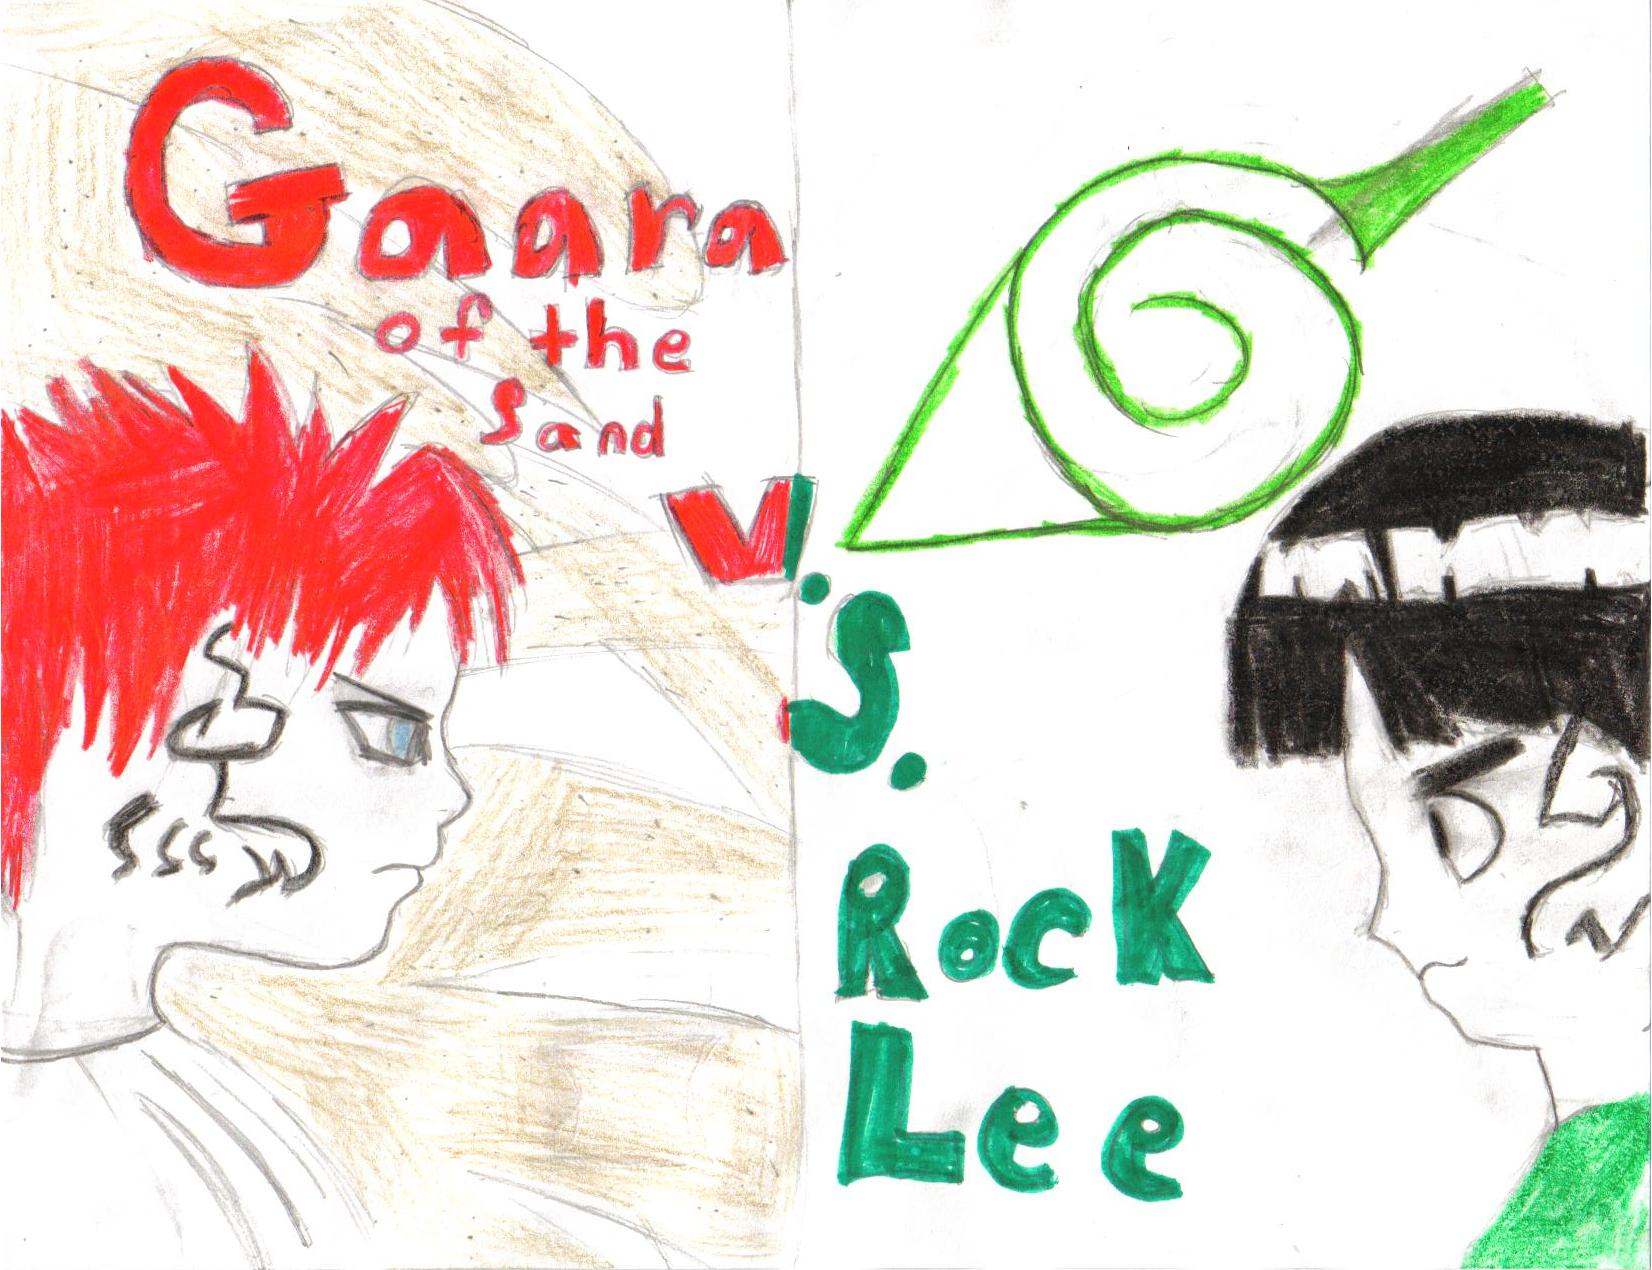 Gaara vs Rock Lee by animegirl_117